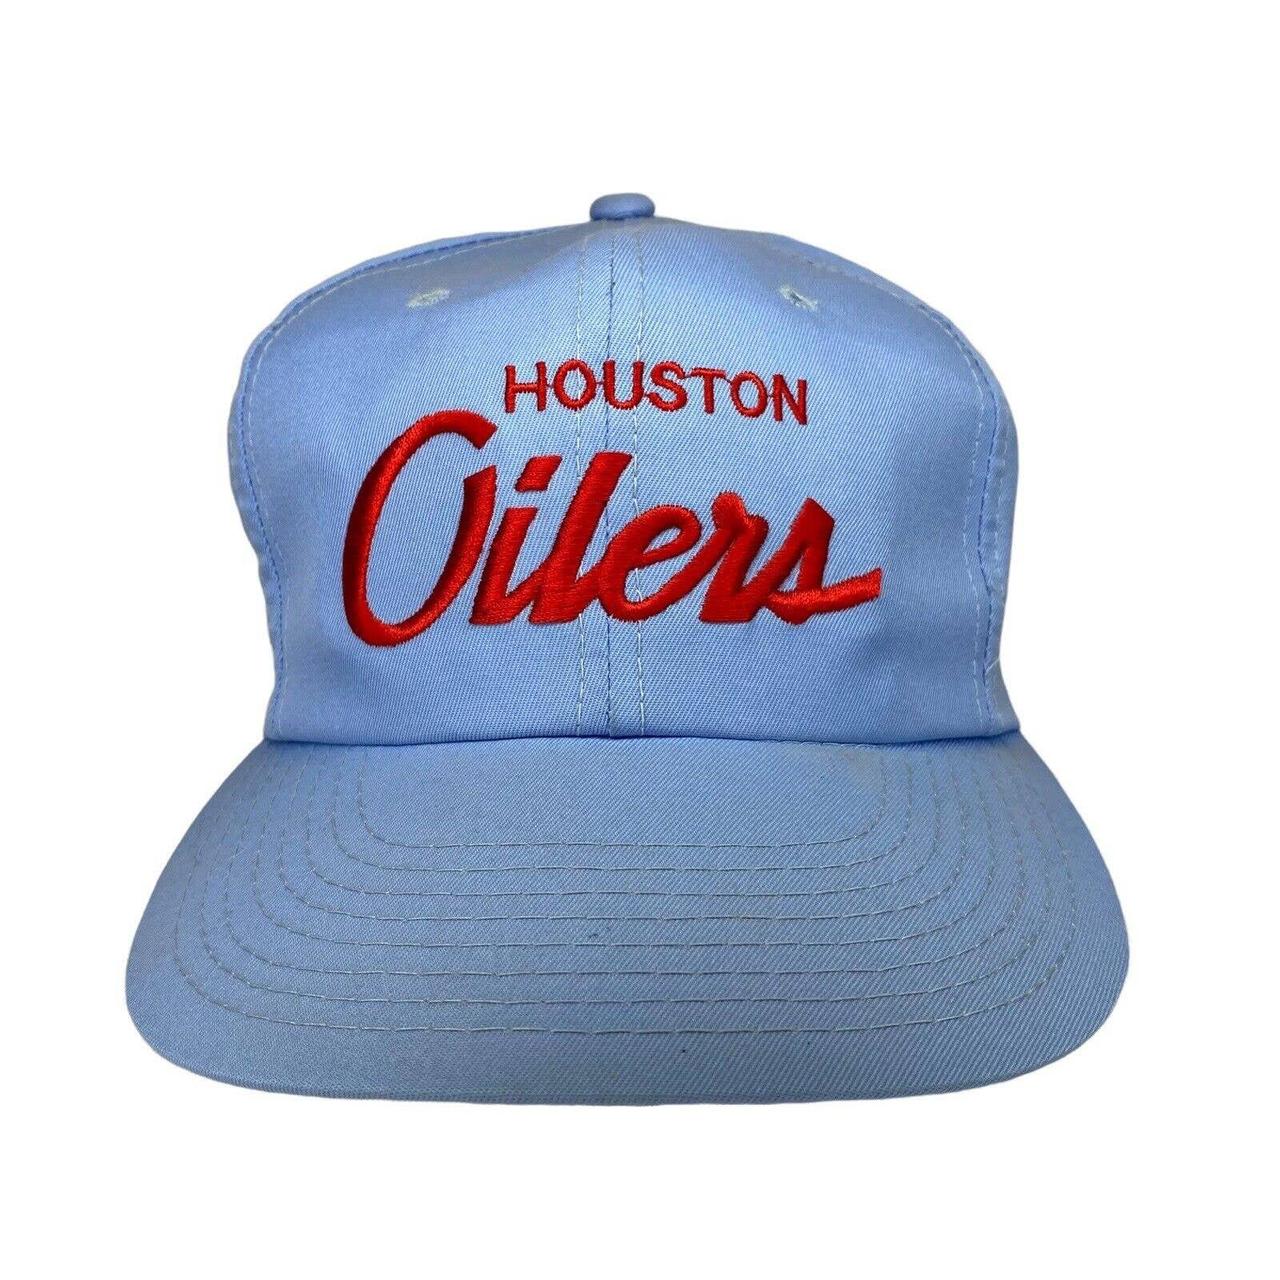 Houston Oilers Vintage Hat